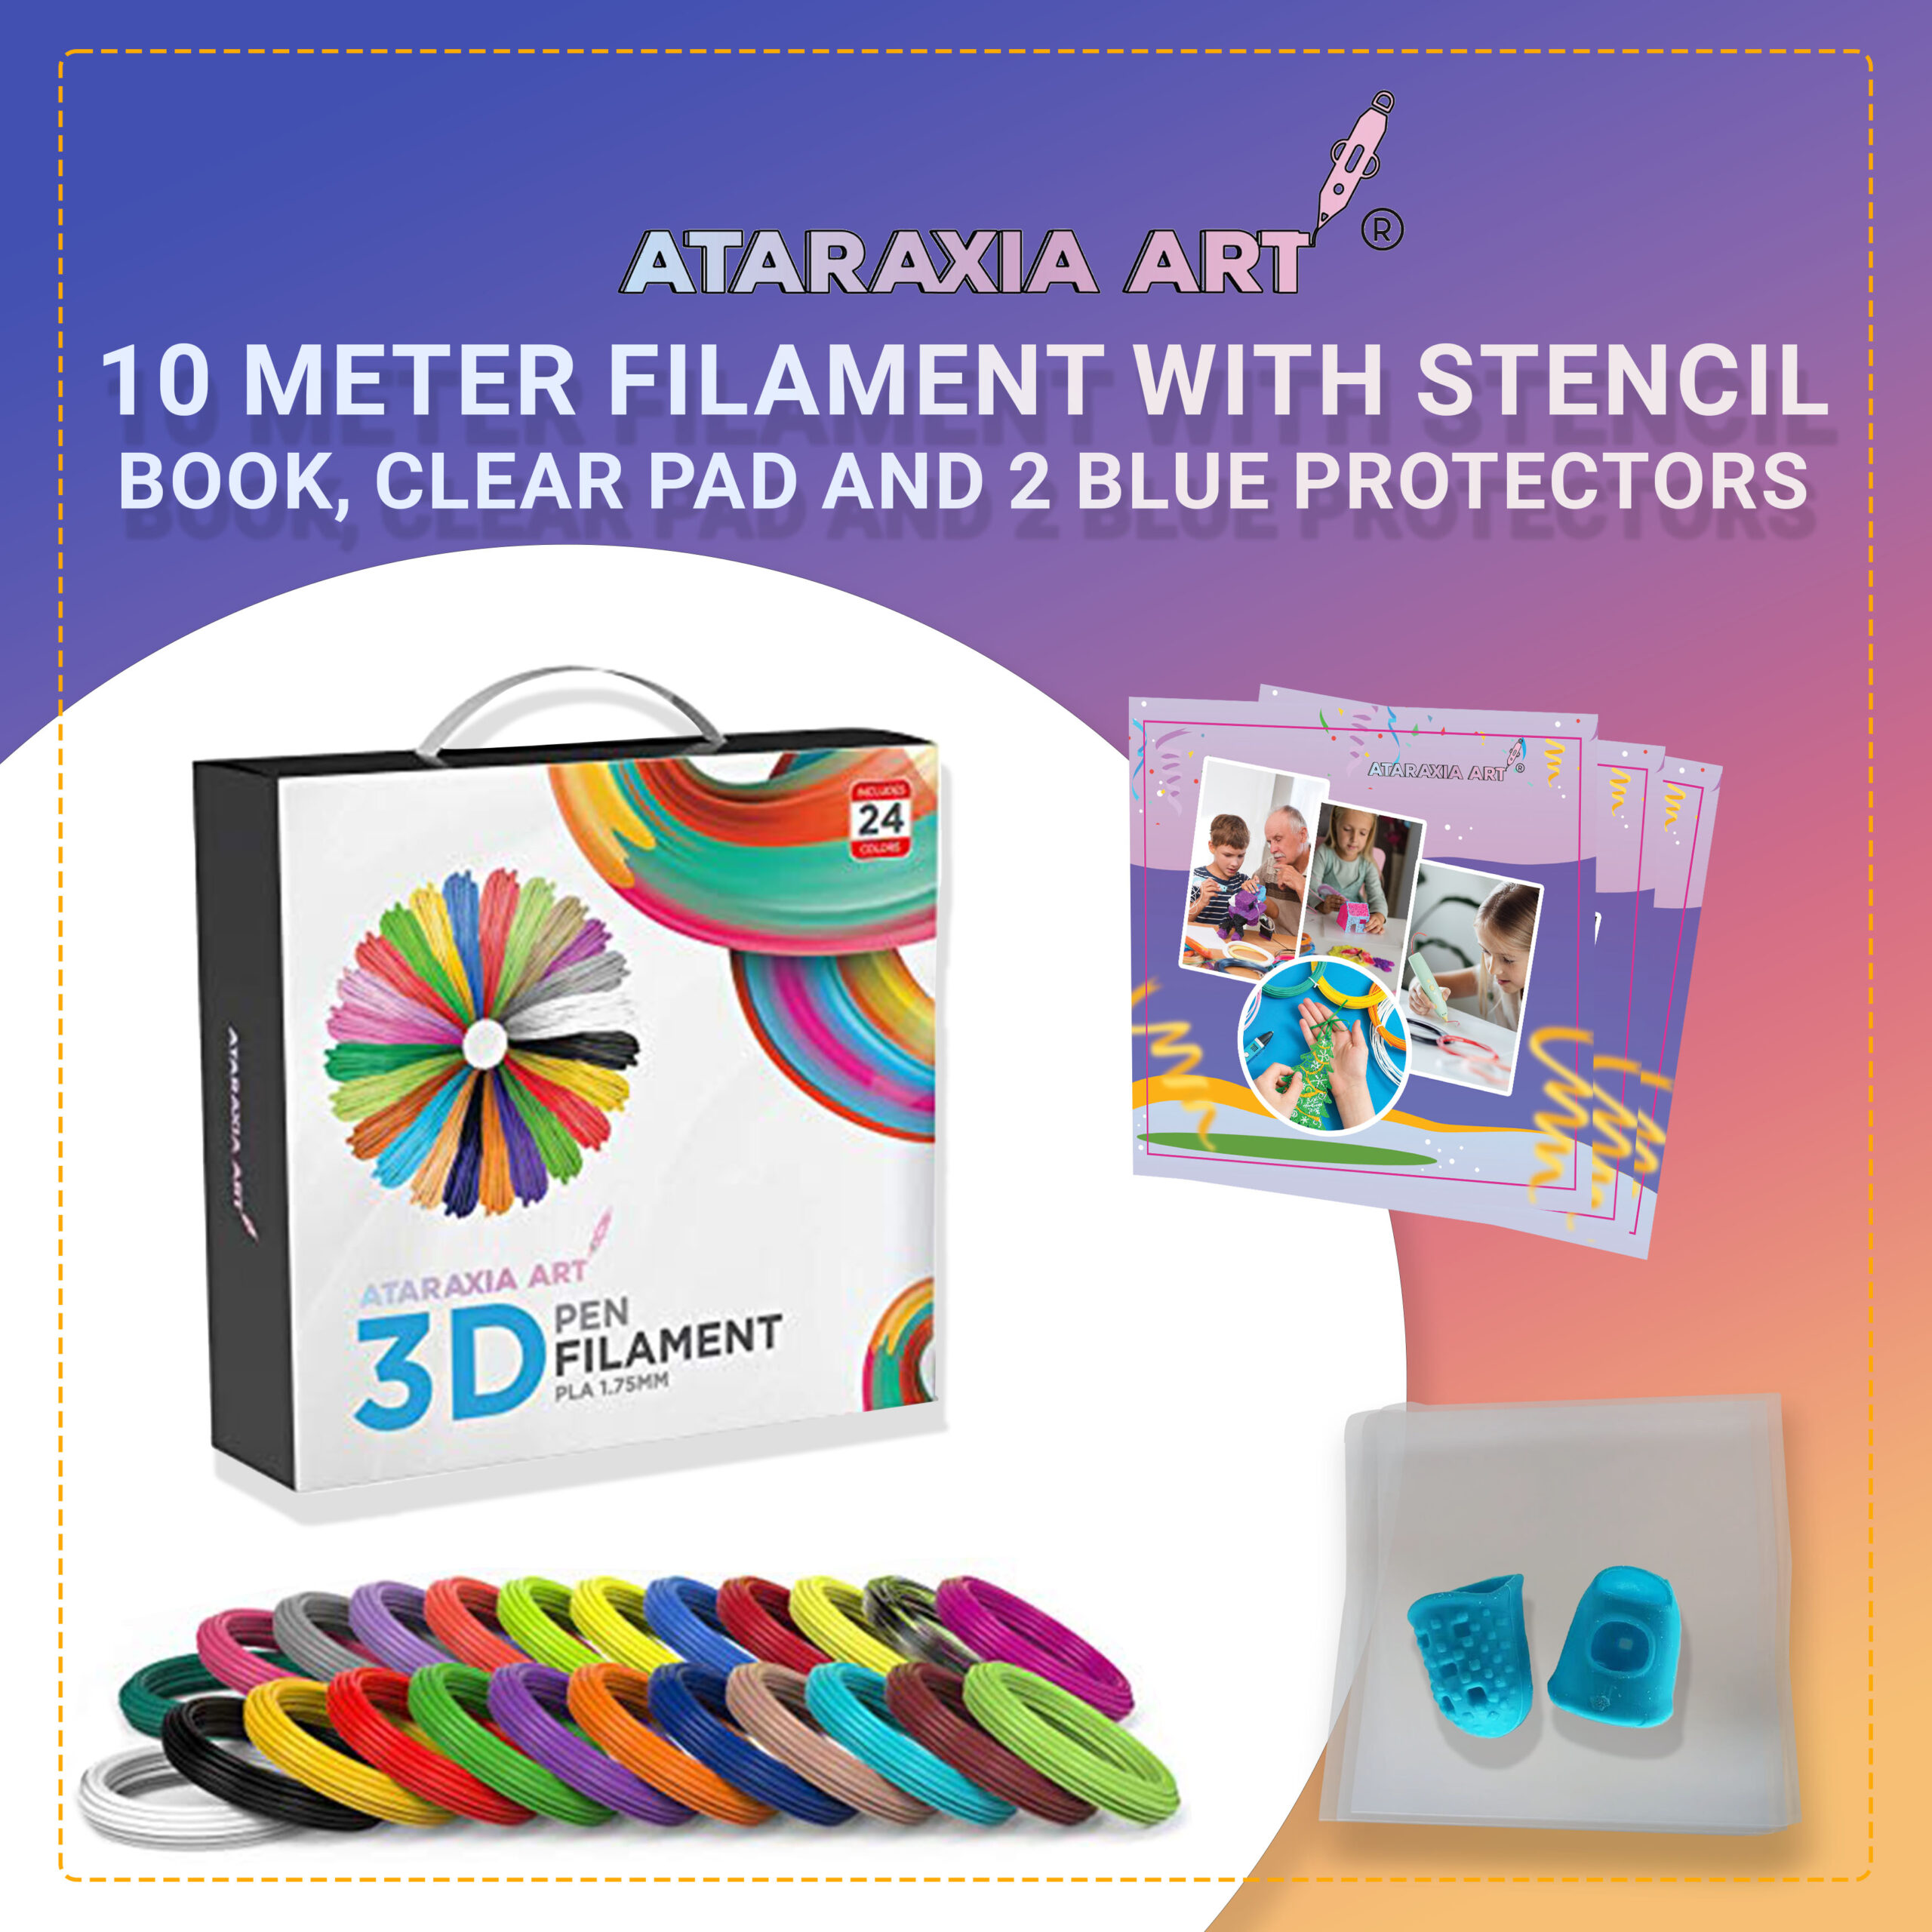  ATARAXIA ART 3D Pen Silk Filament Refills 24 Colors,Each Color  10m/33feet Total 782Ft,4 Fluorescent & 4 Translucent Colors,Kids Safe,Shiny  1.75mm Silk PLA Compatible with 3D Printer & mat,10 Meter : Industrial